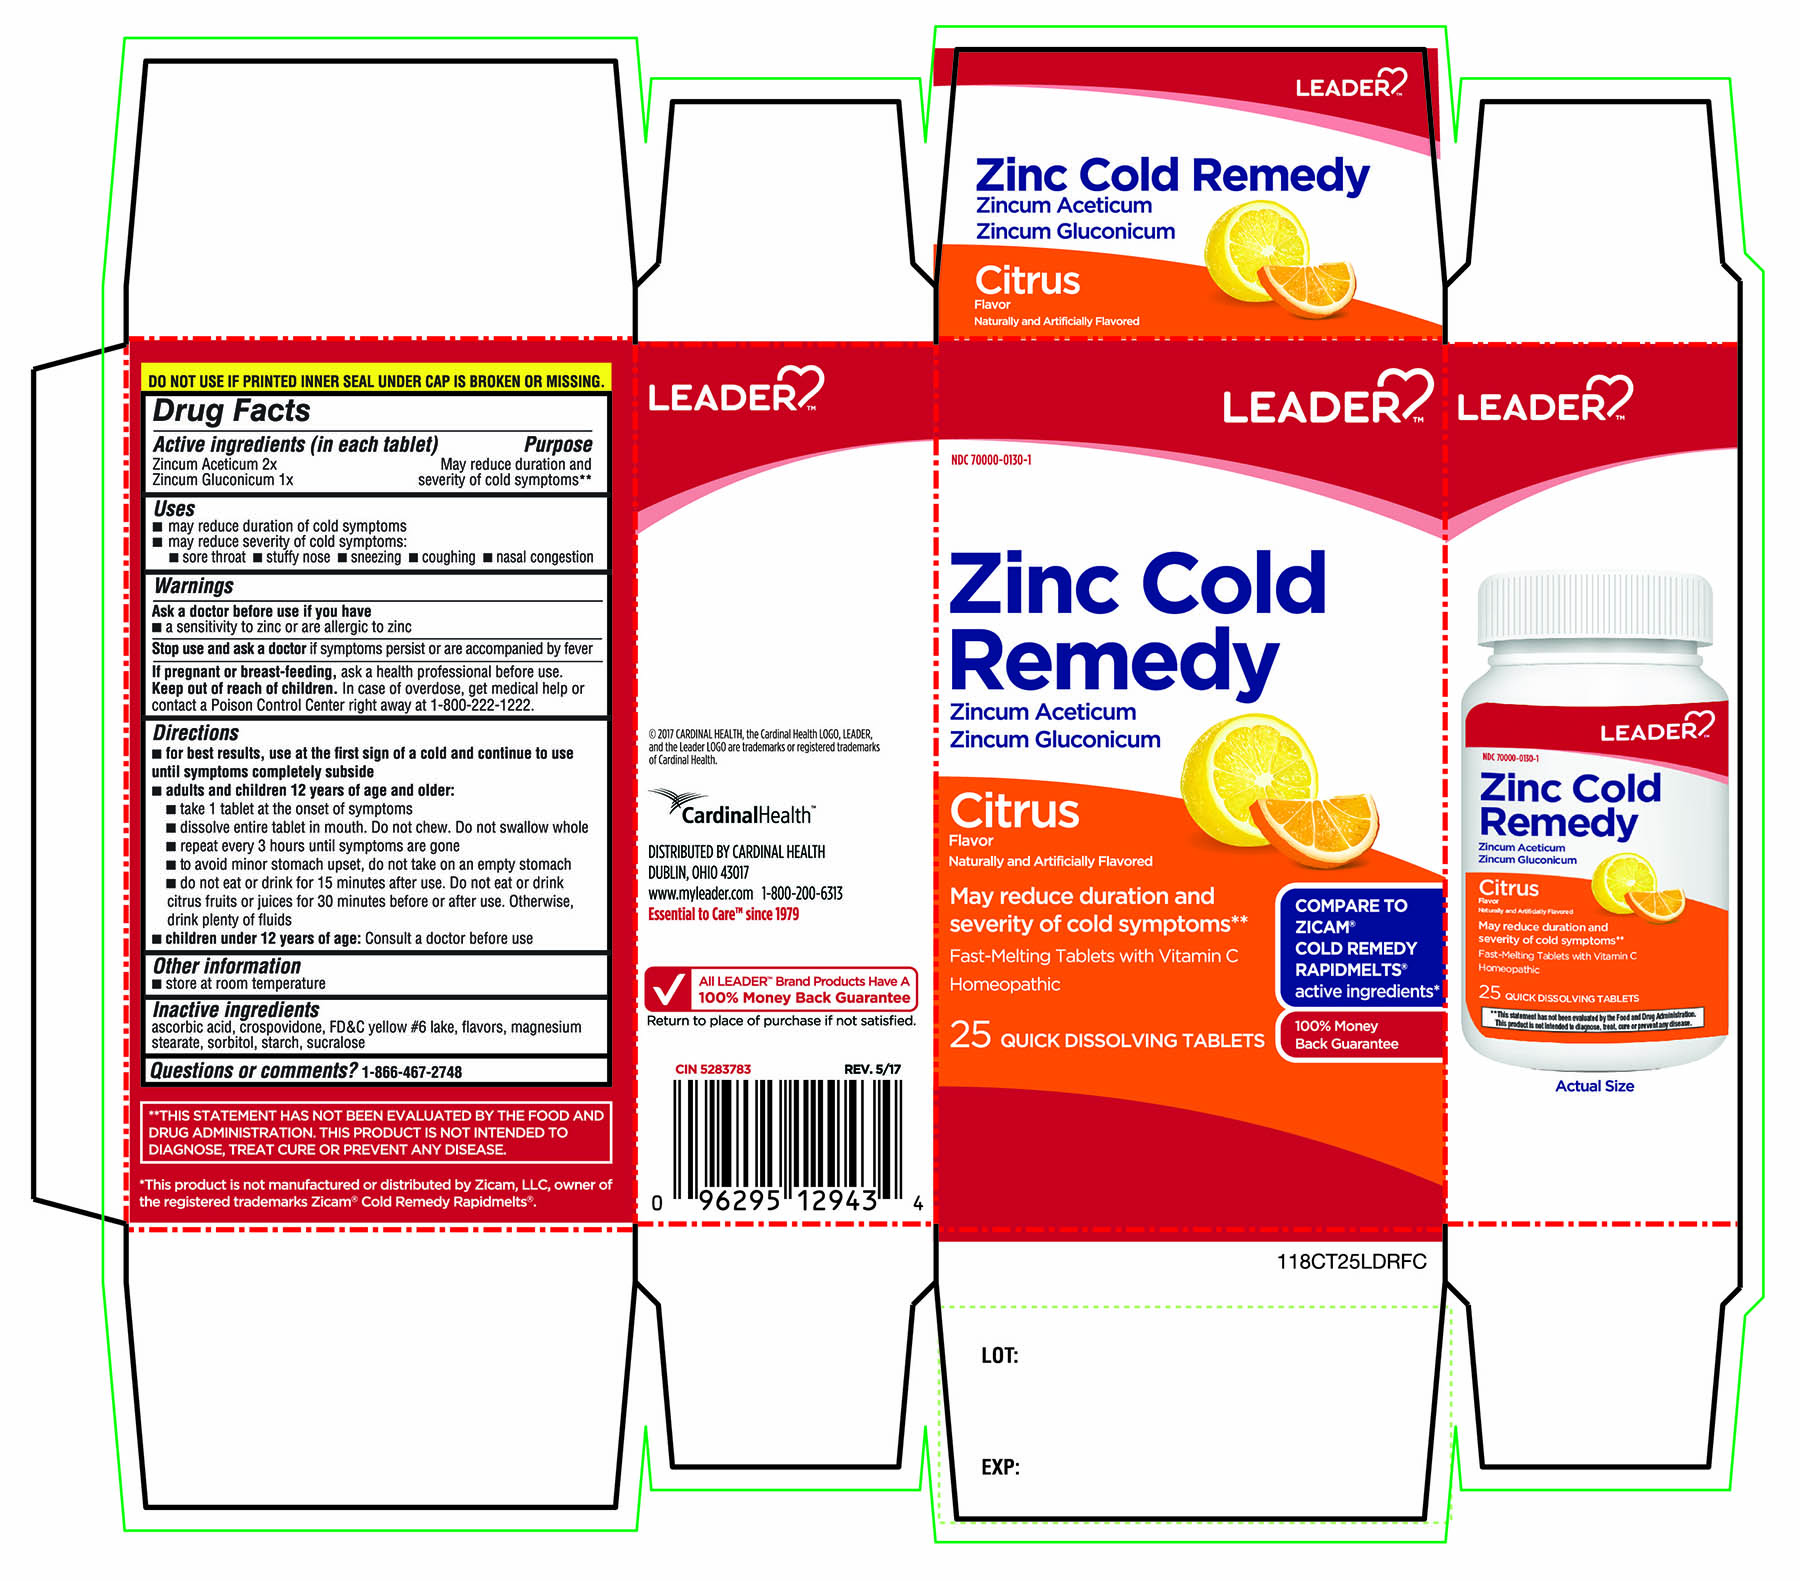  Leader Zinc Cold Remedy Citrus  Flavor 25 Quick Dissolving  tablets